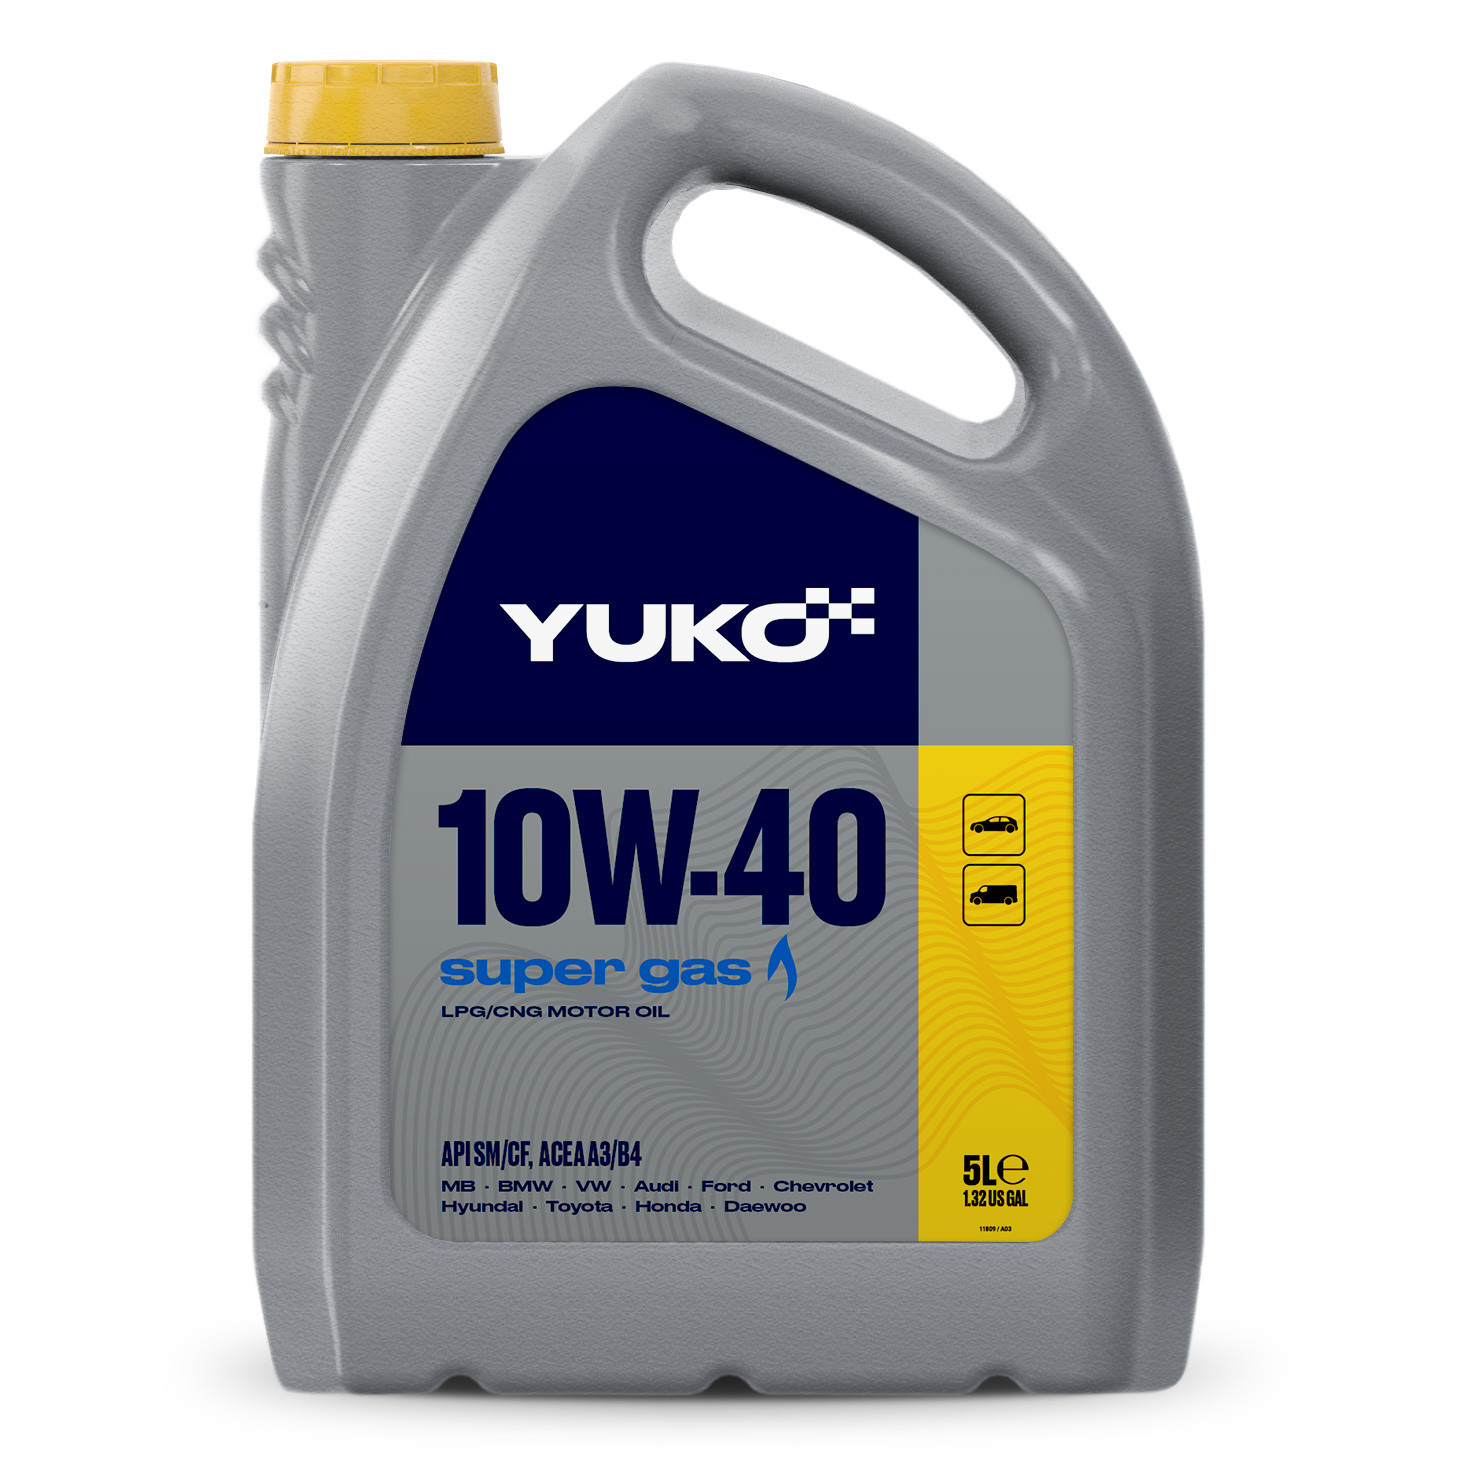 Масло моторное YUKO Super gas 10W40 5.0л